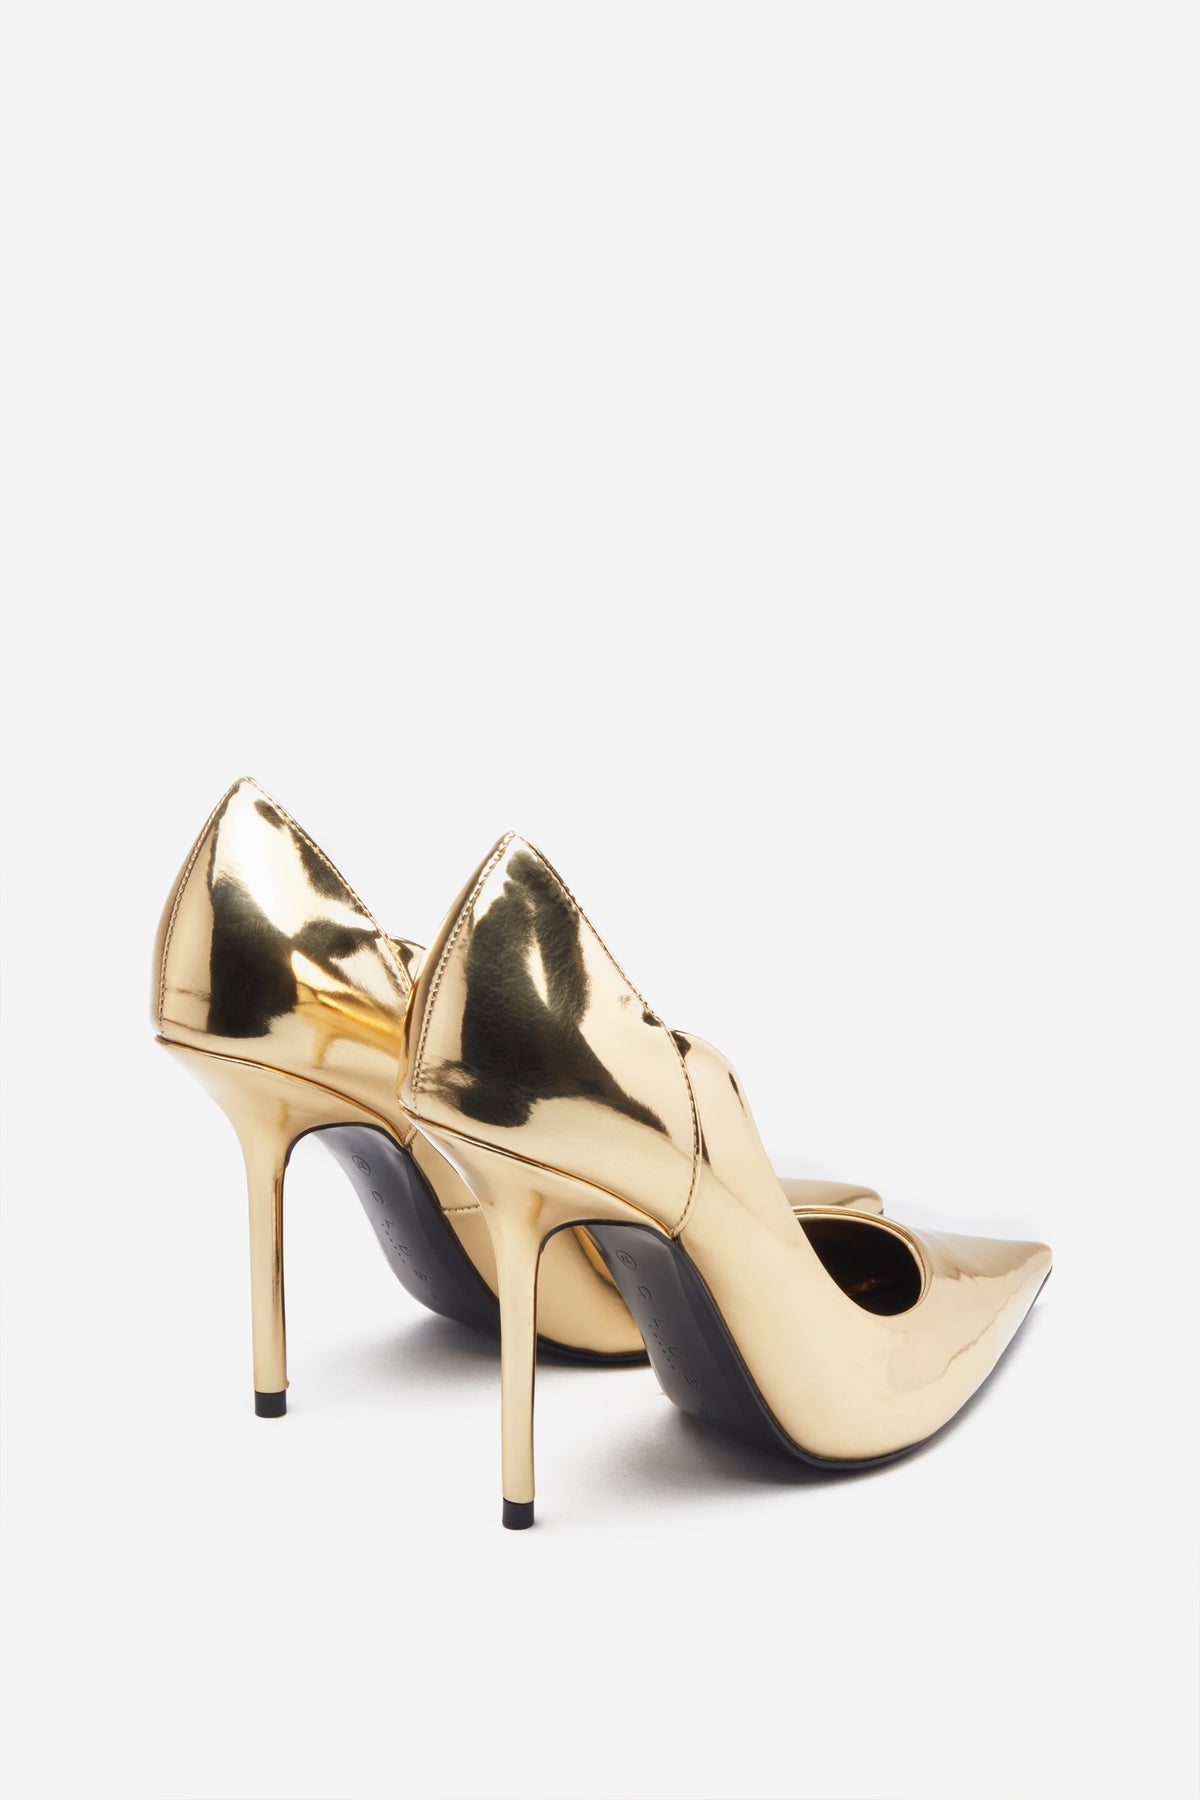 Emmy London Rebecca Blush Suede Pumps - Kate Middleton Shoes - Kate's Closet